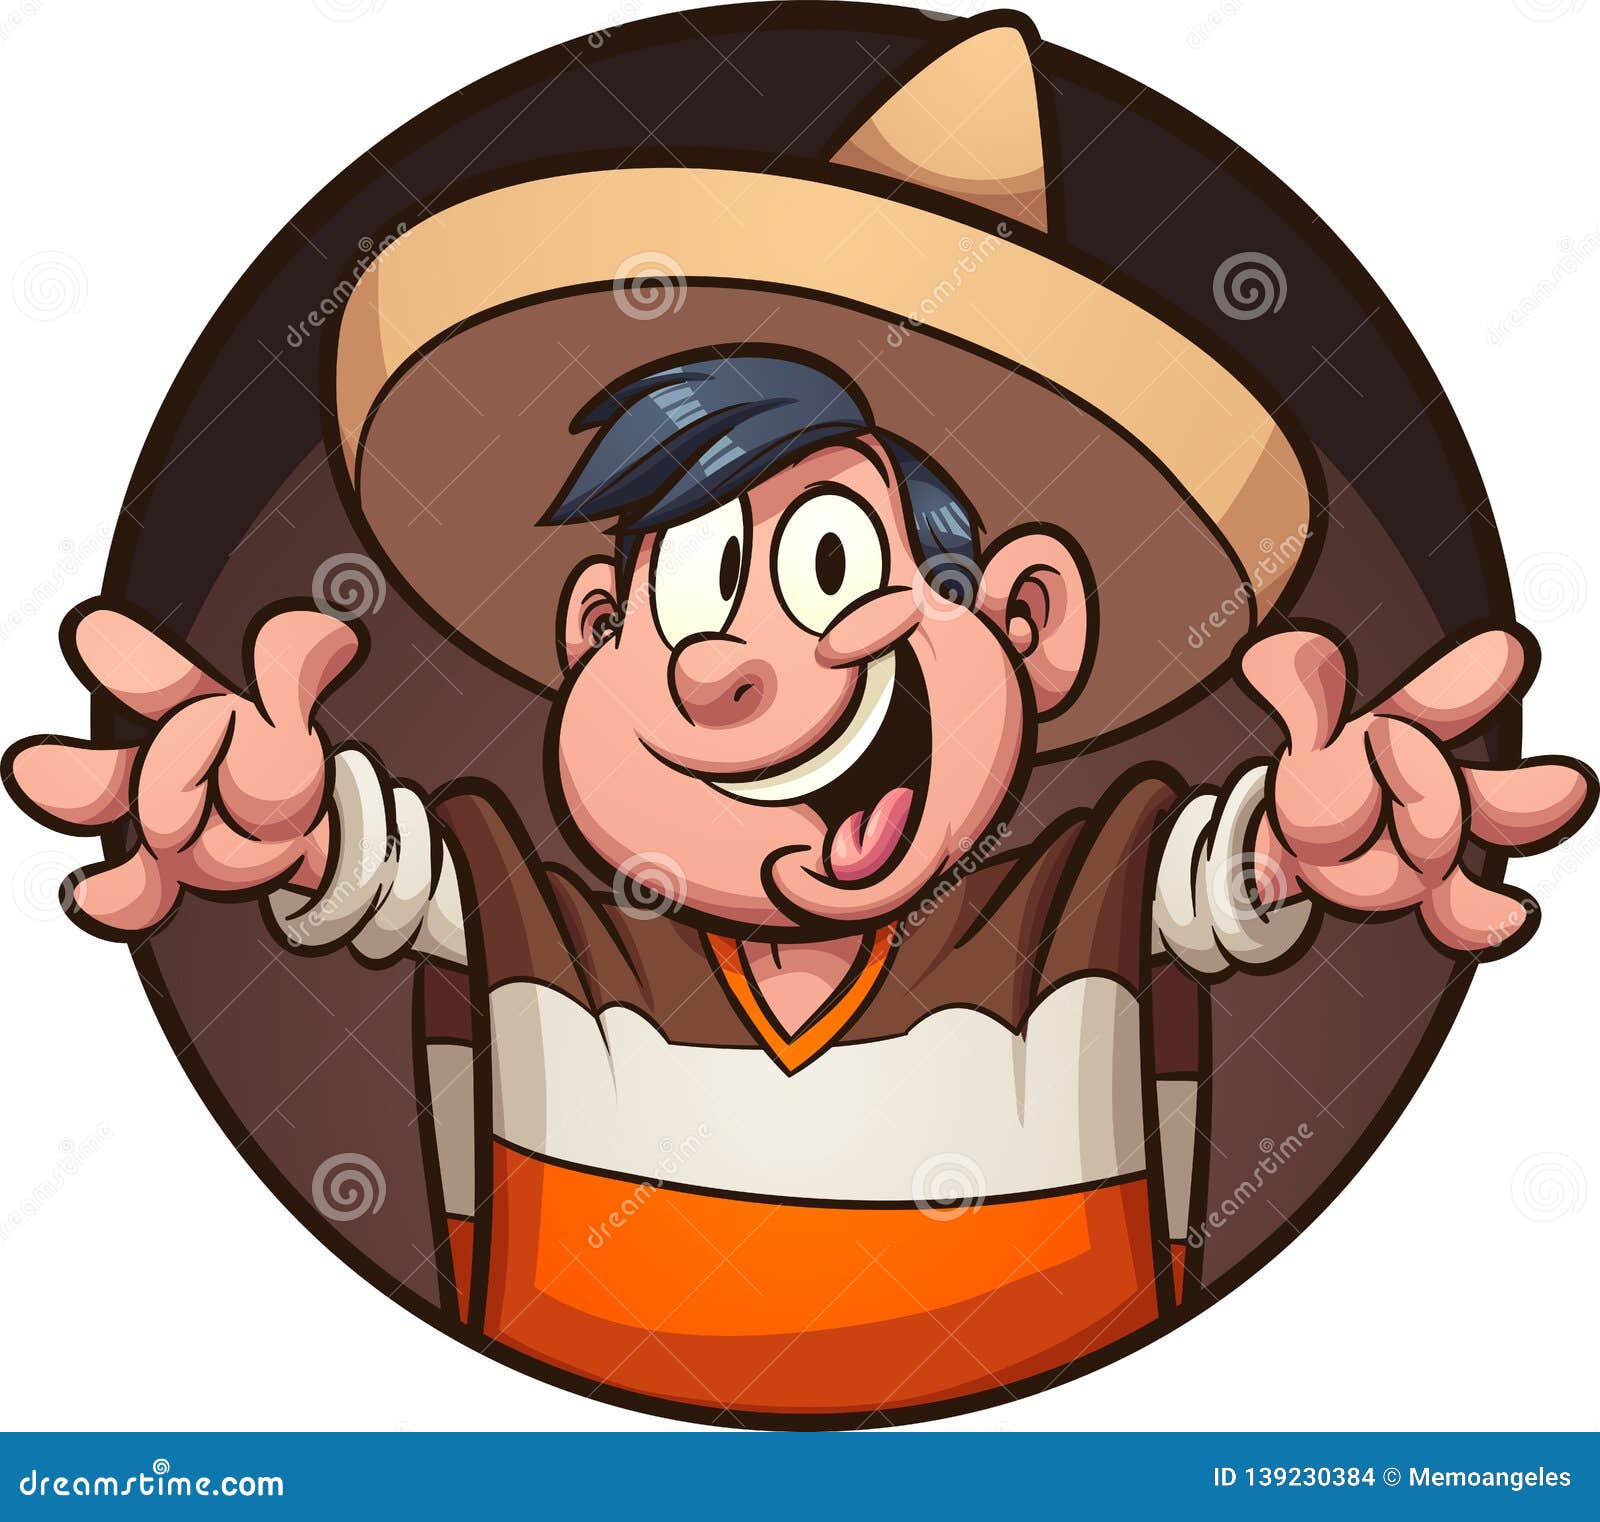 Cartoon Mexican Boy Wearing a Poncho and Sombrero Stock Vector Illustration of poncho, cartoon: 139230384